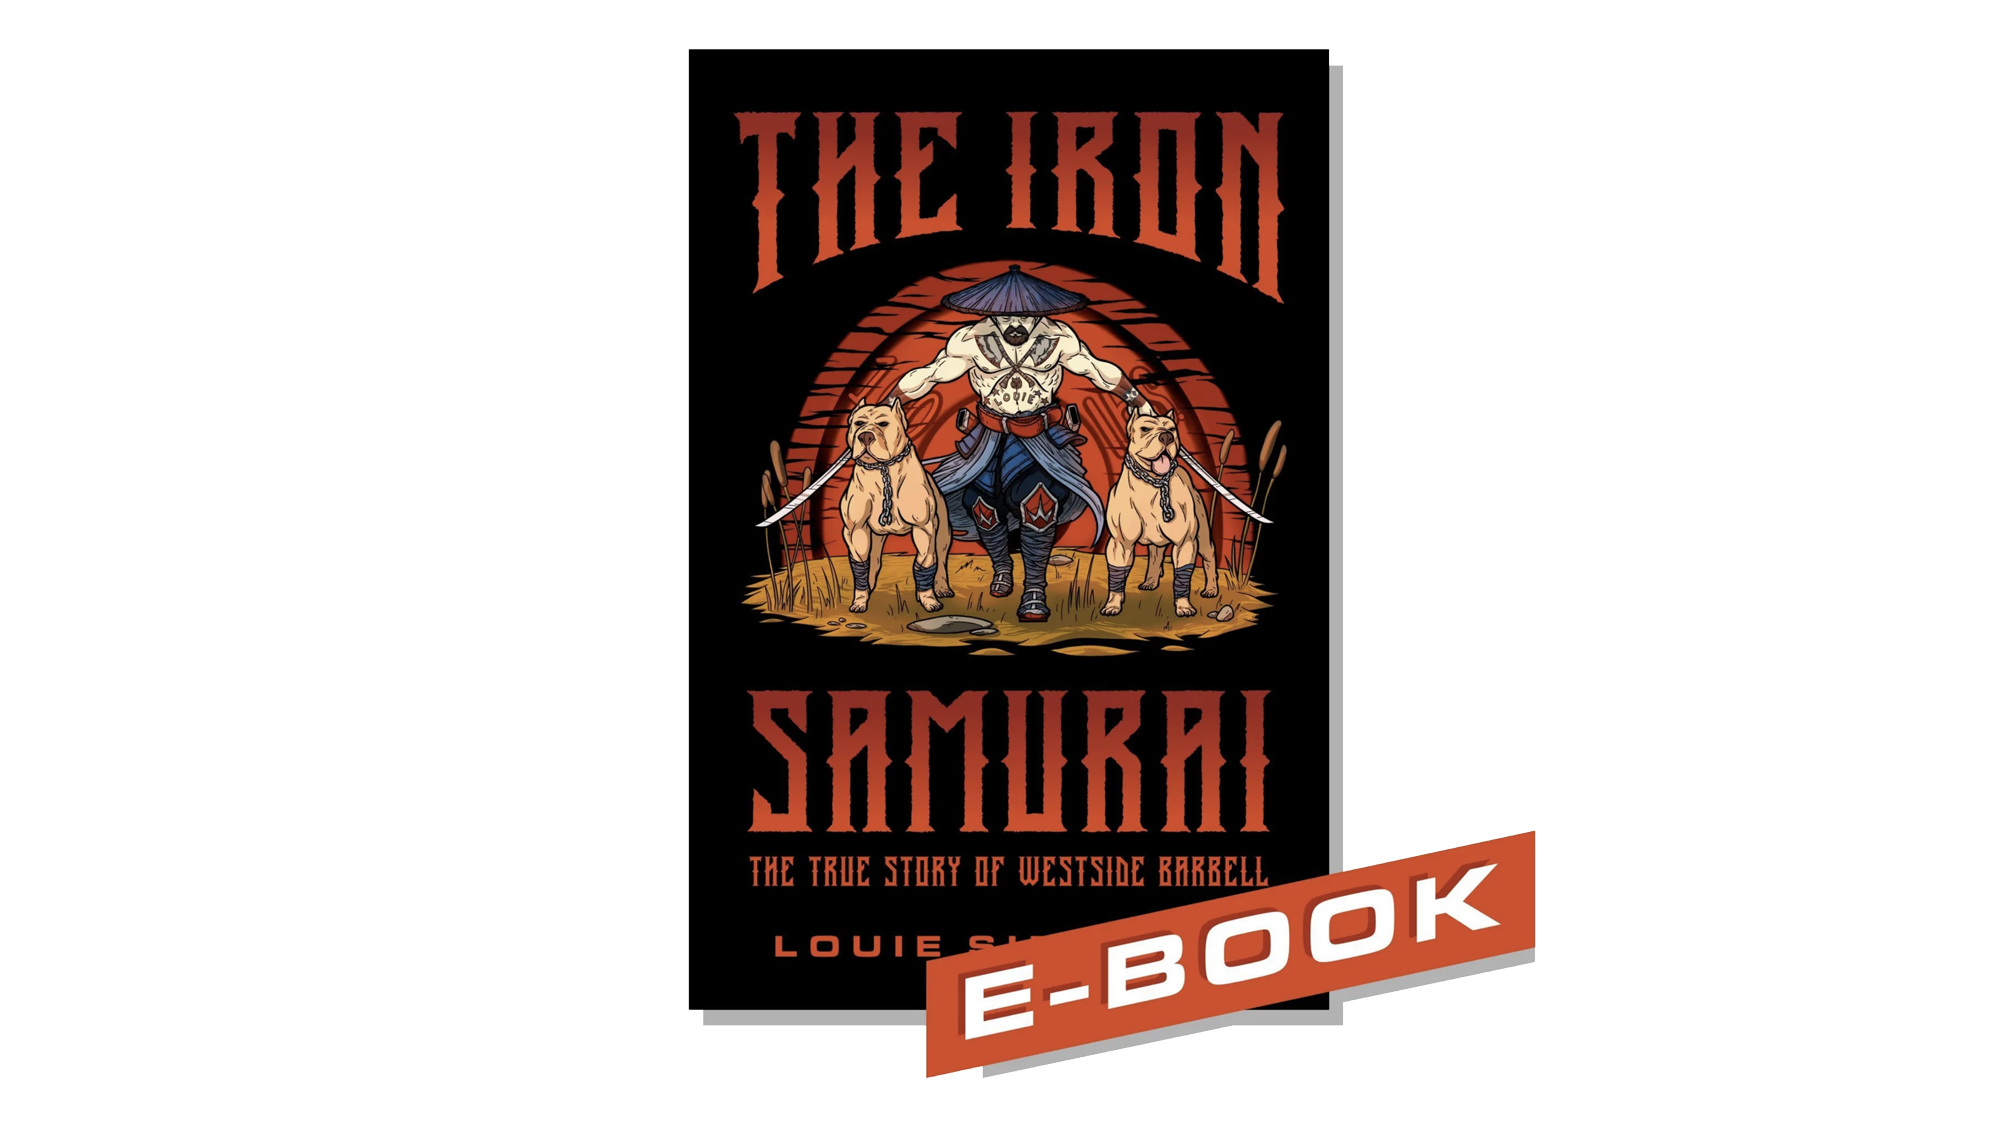 The Iron Samurai